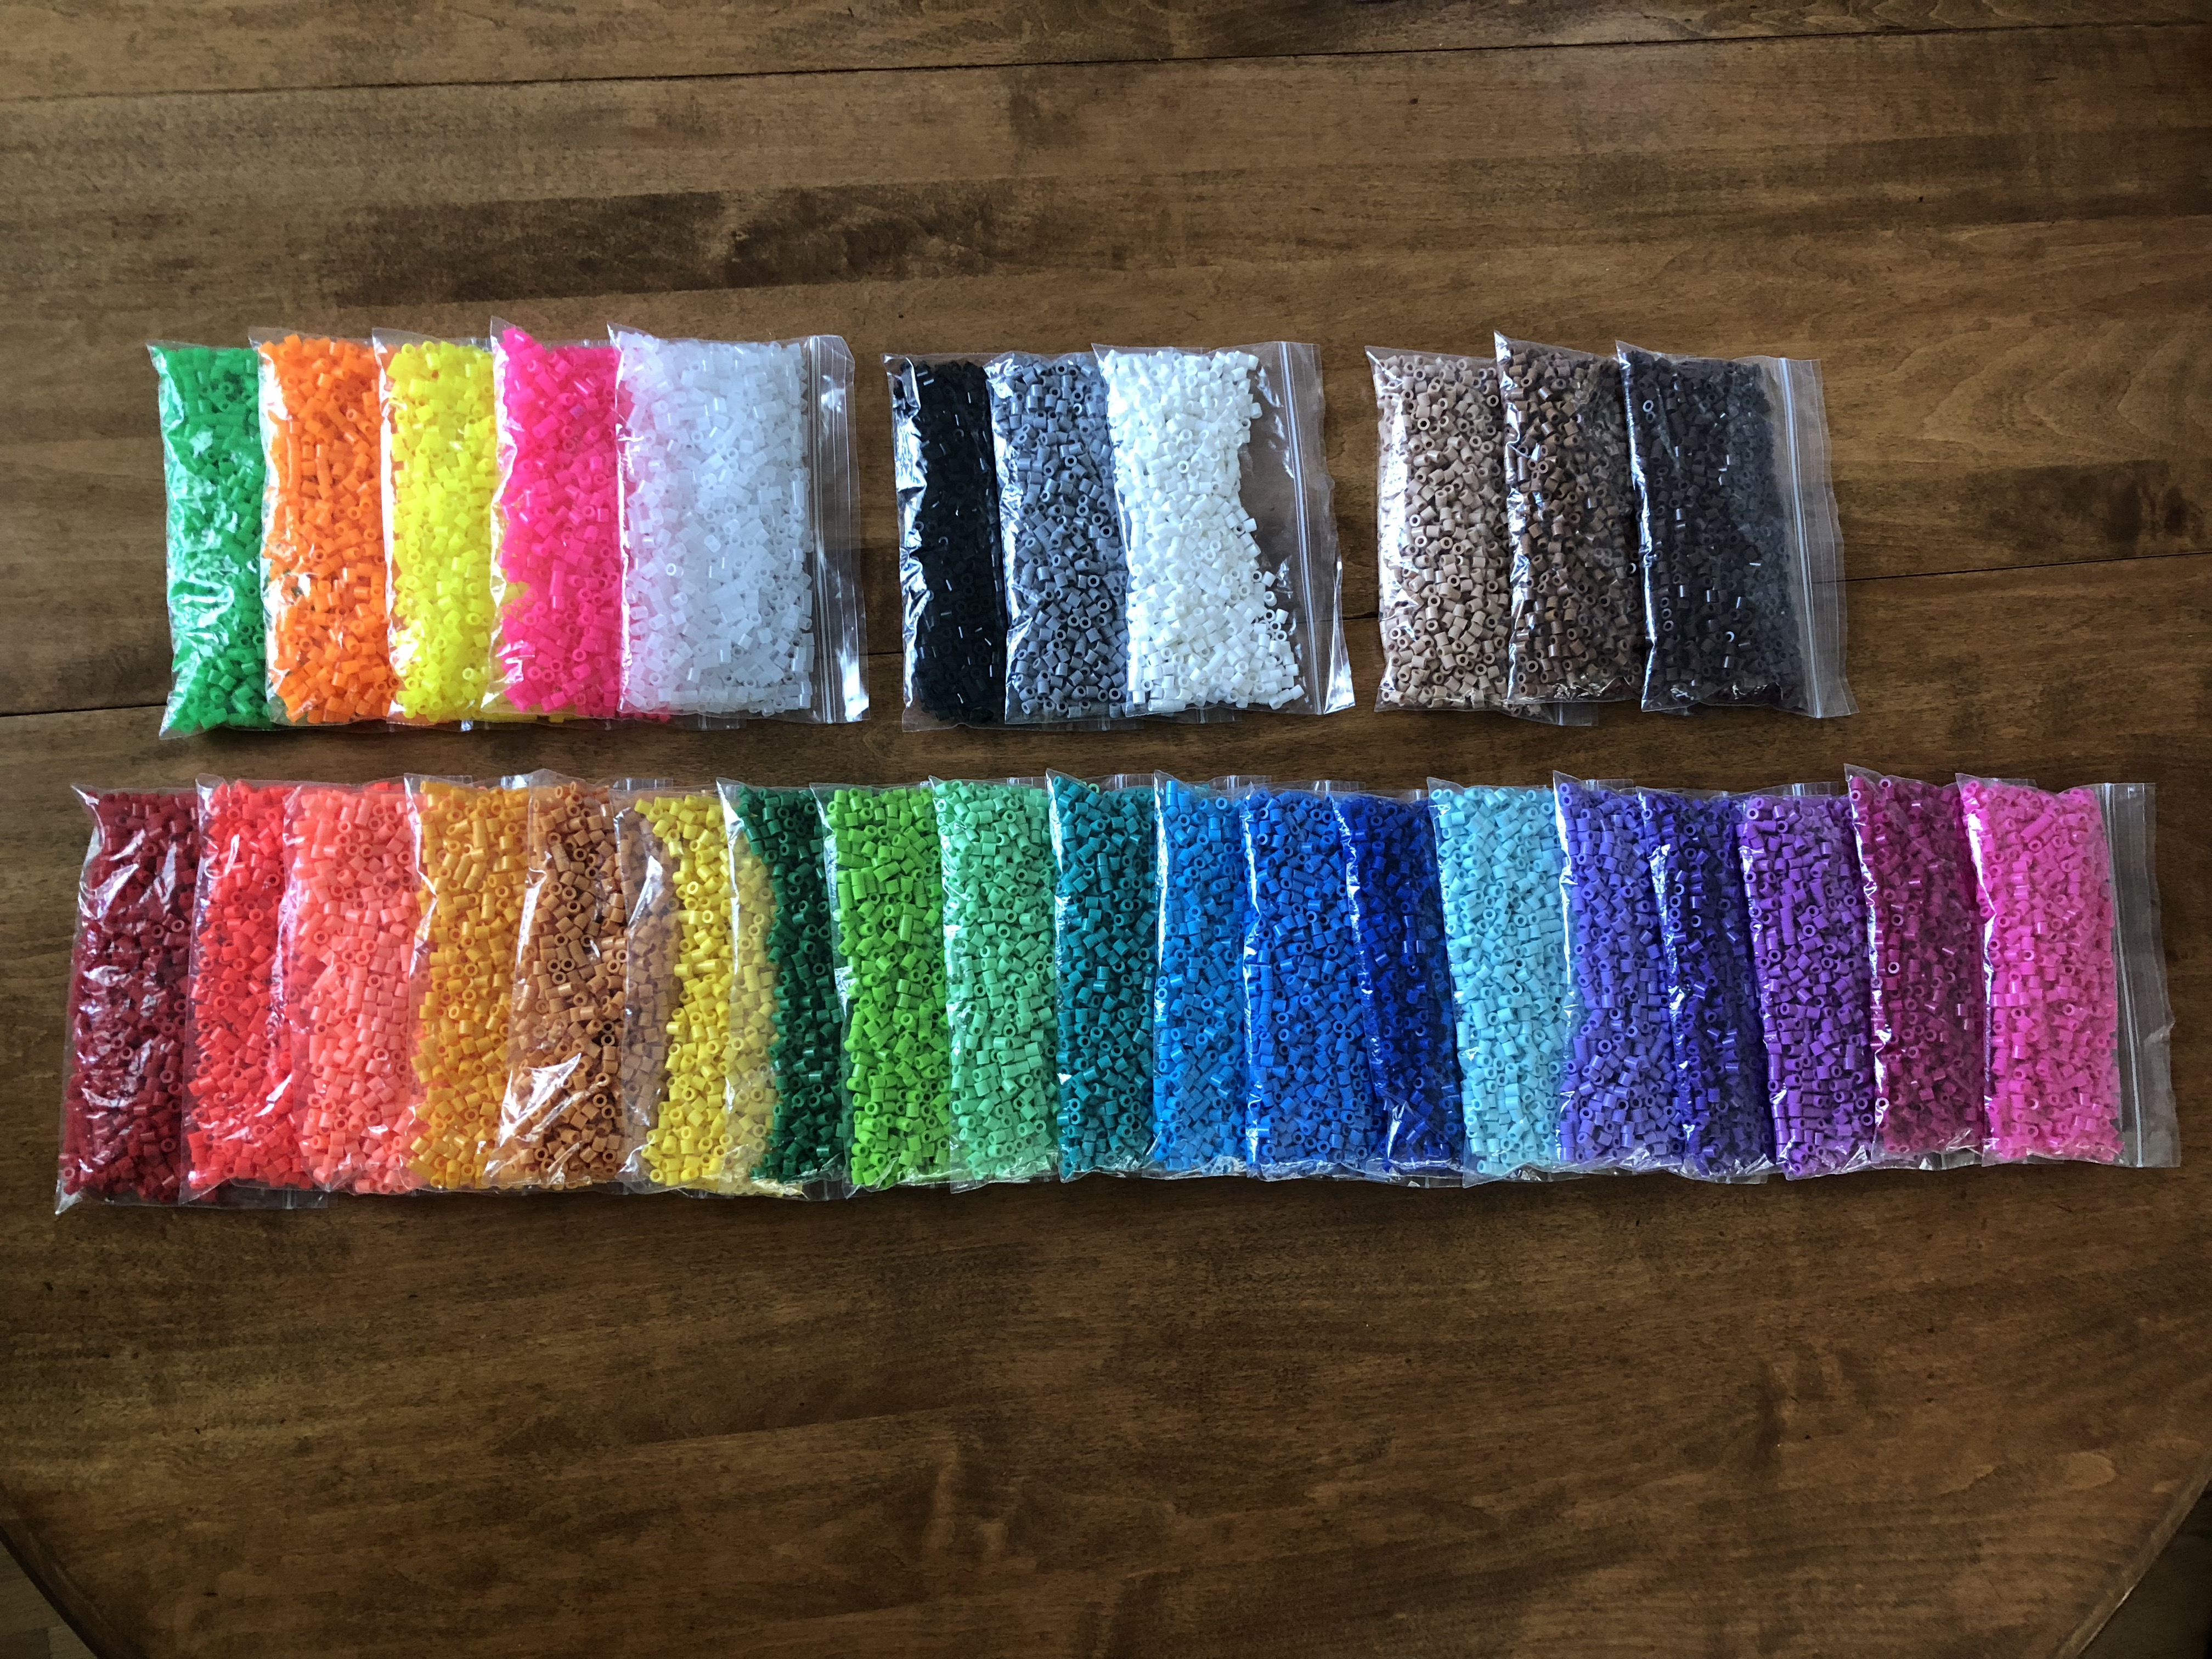 Sorting Coloured Beads - Phidgets